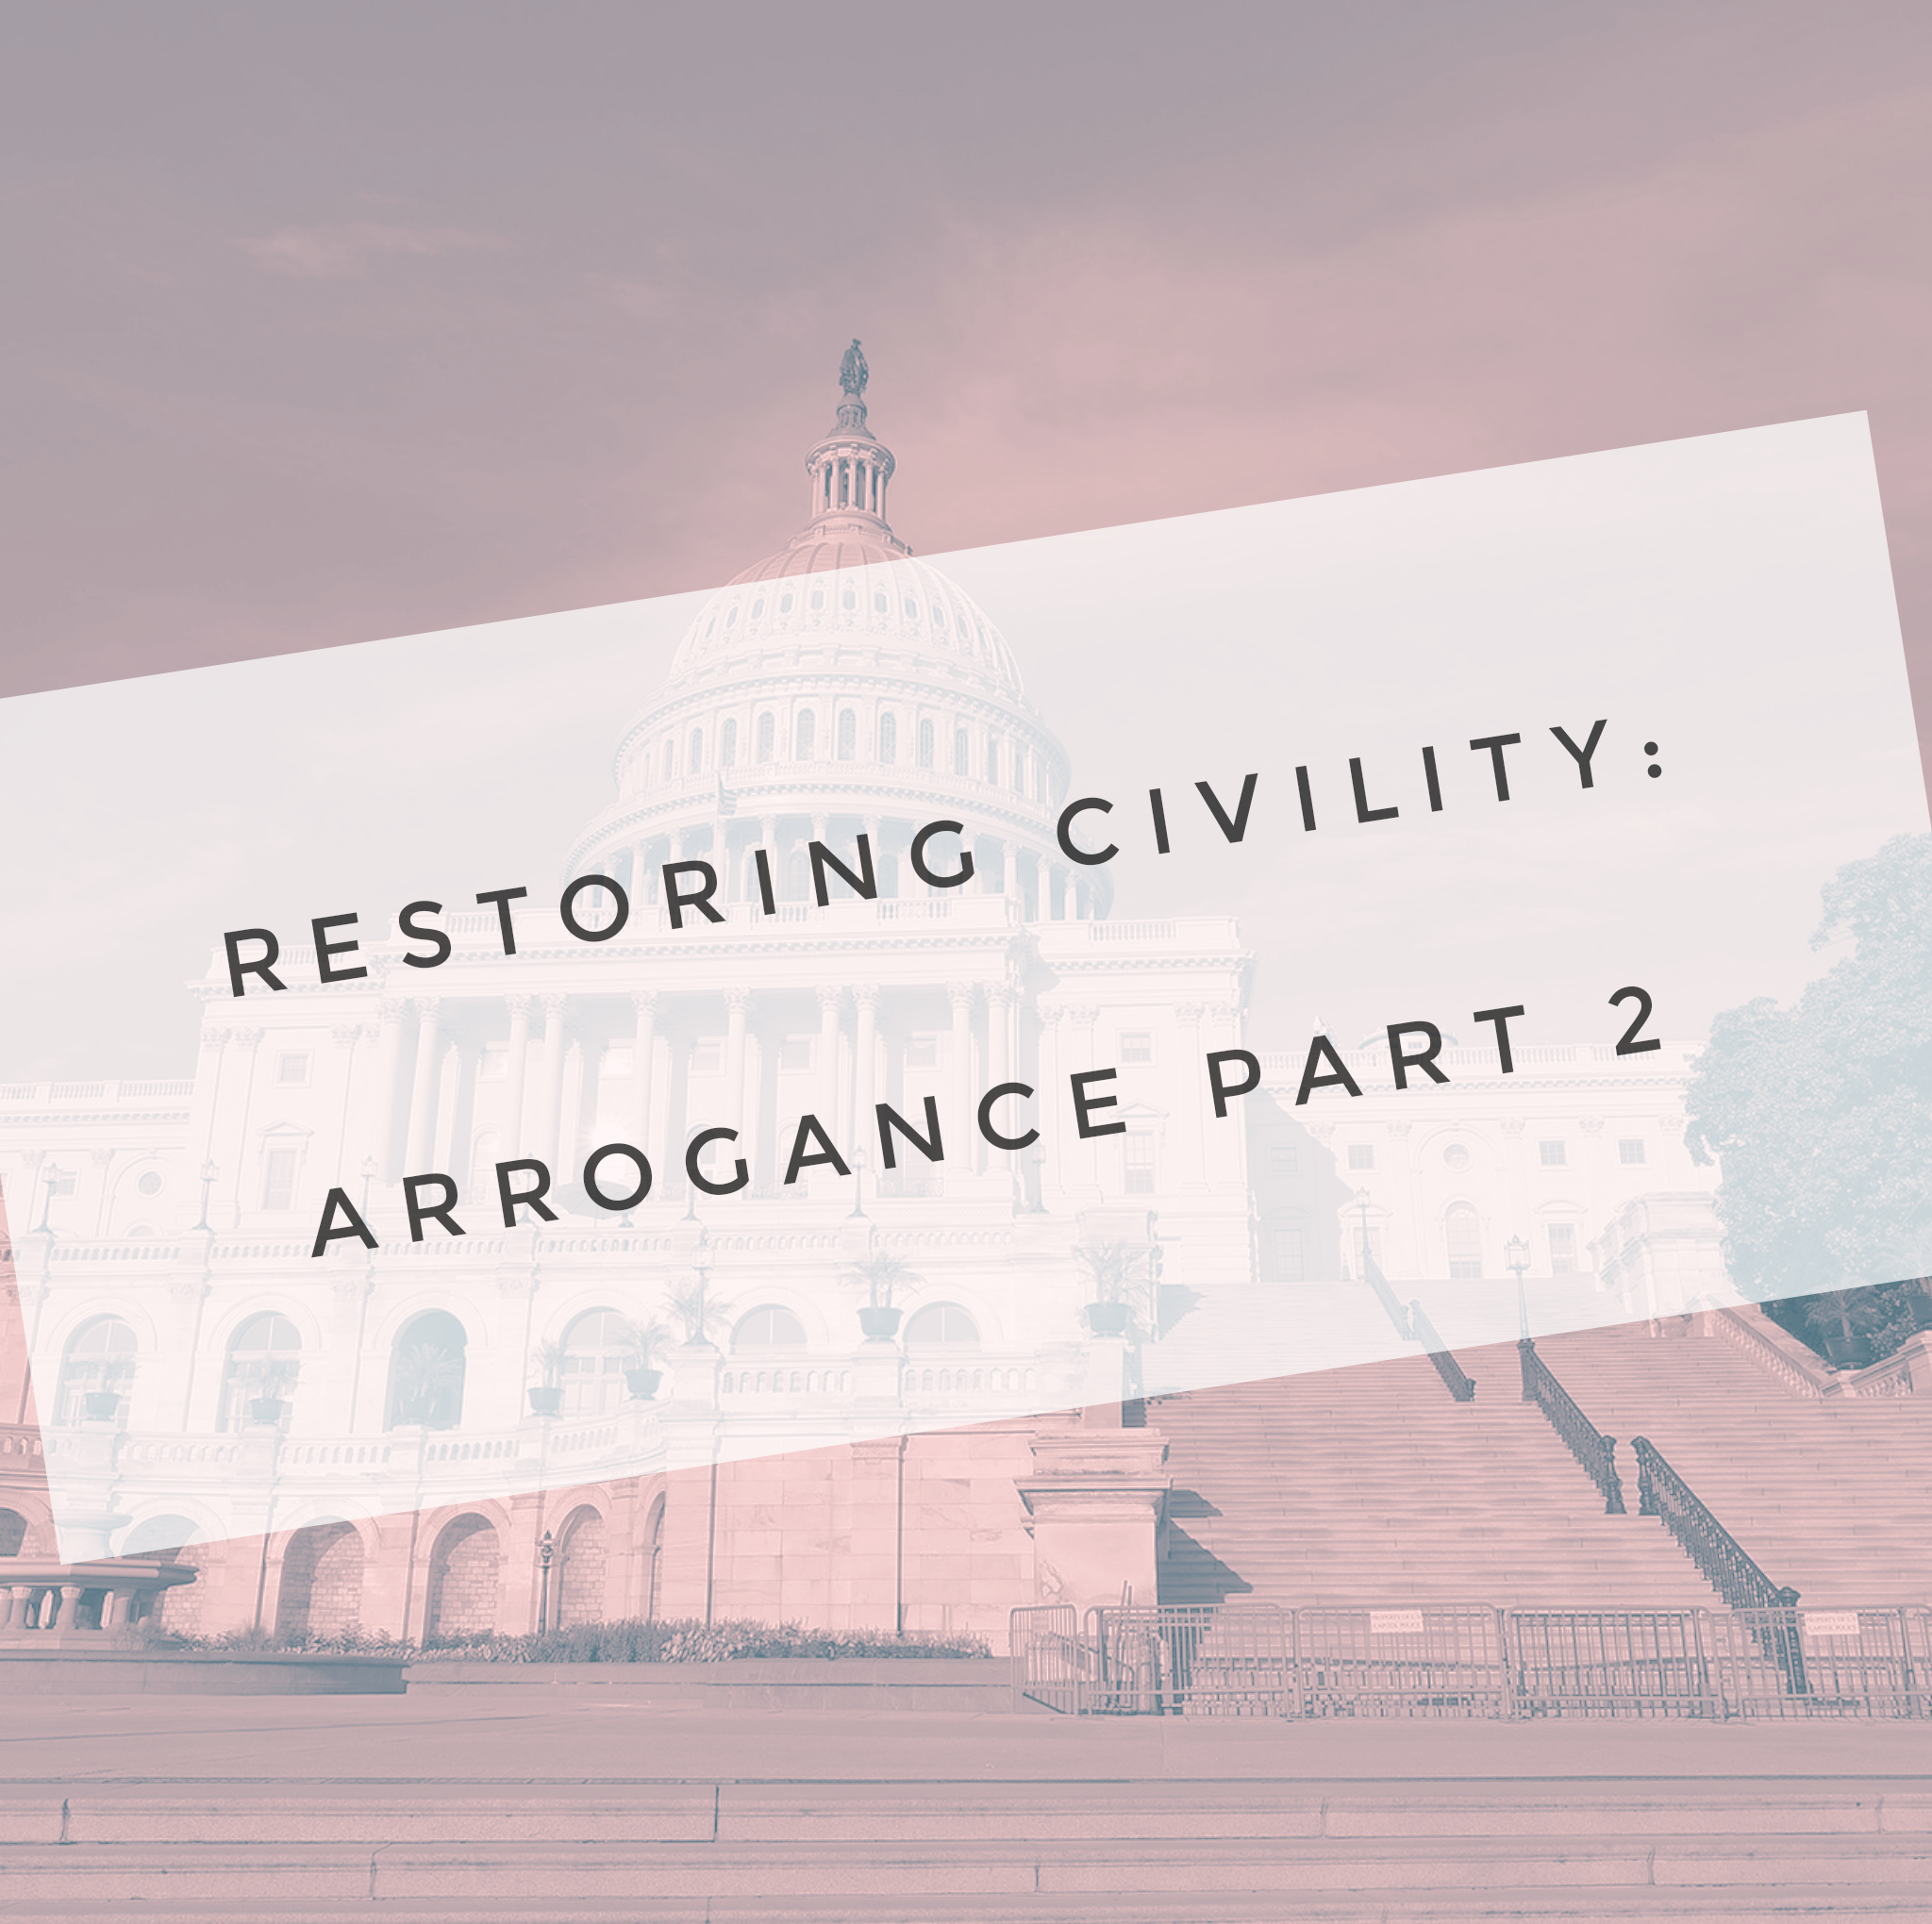 Restoring Civility: Arrogance Part 2